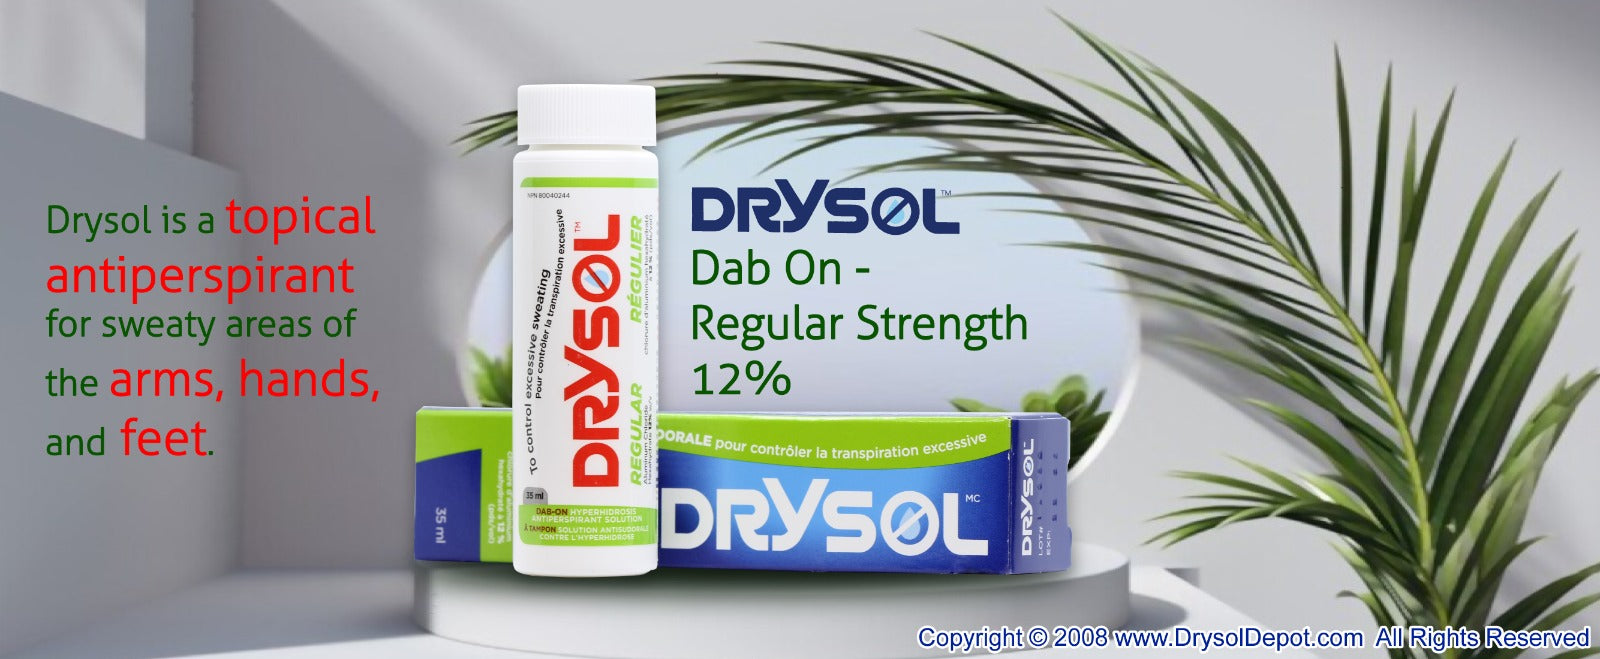 Drysol Dab On Regular Strength 12% - Shop at DrysolDepot.com